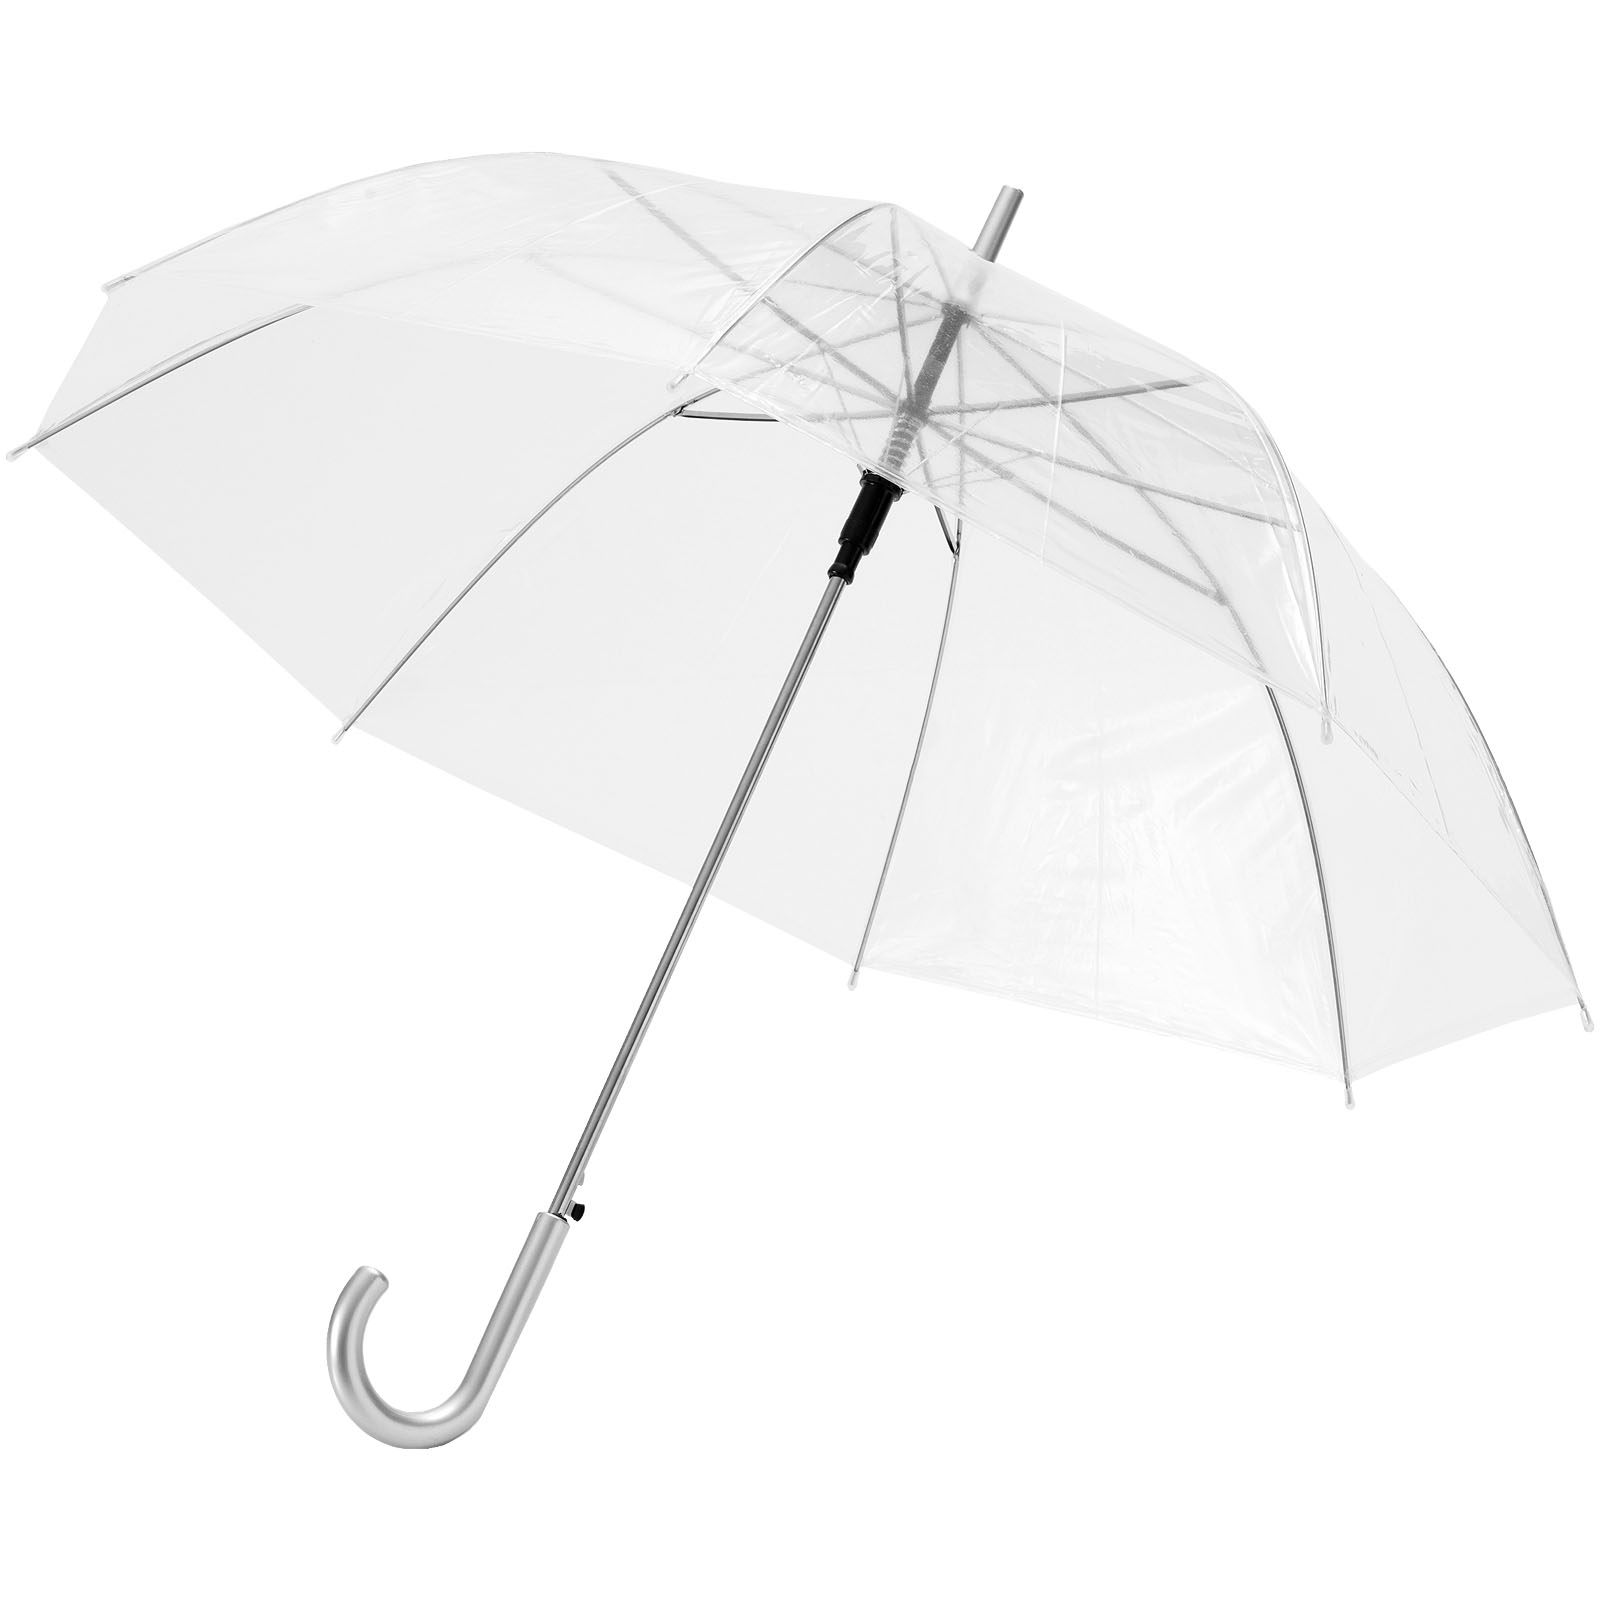 Advertising Standard Umbrellas - Kate 23